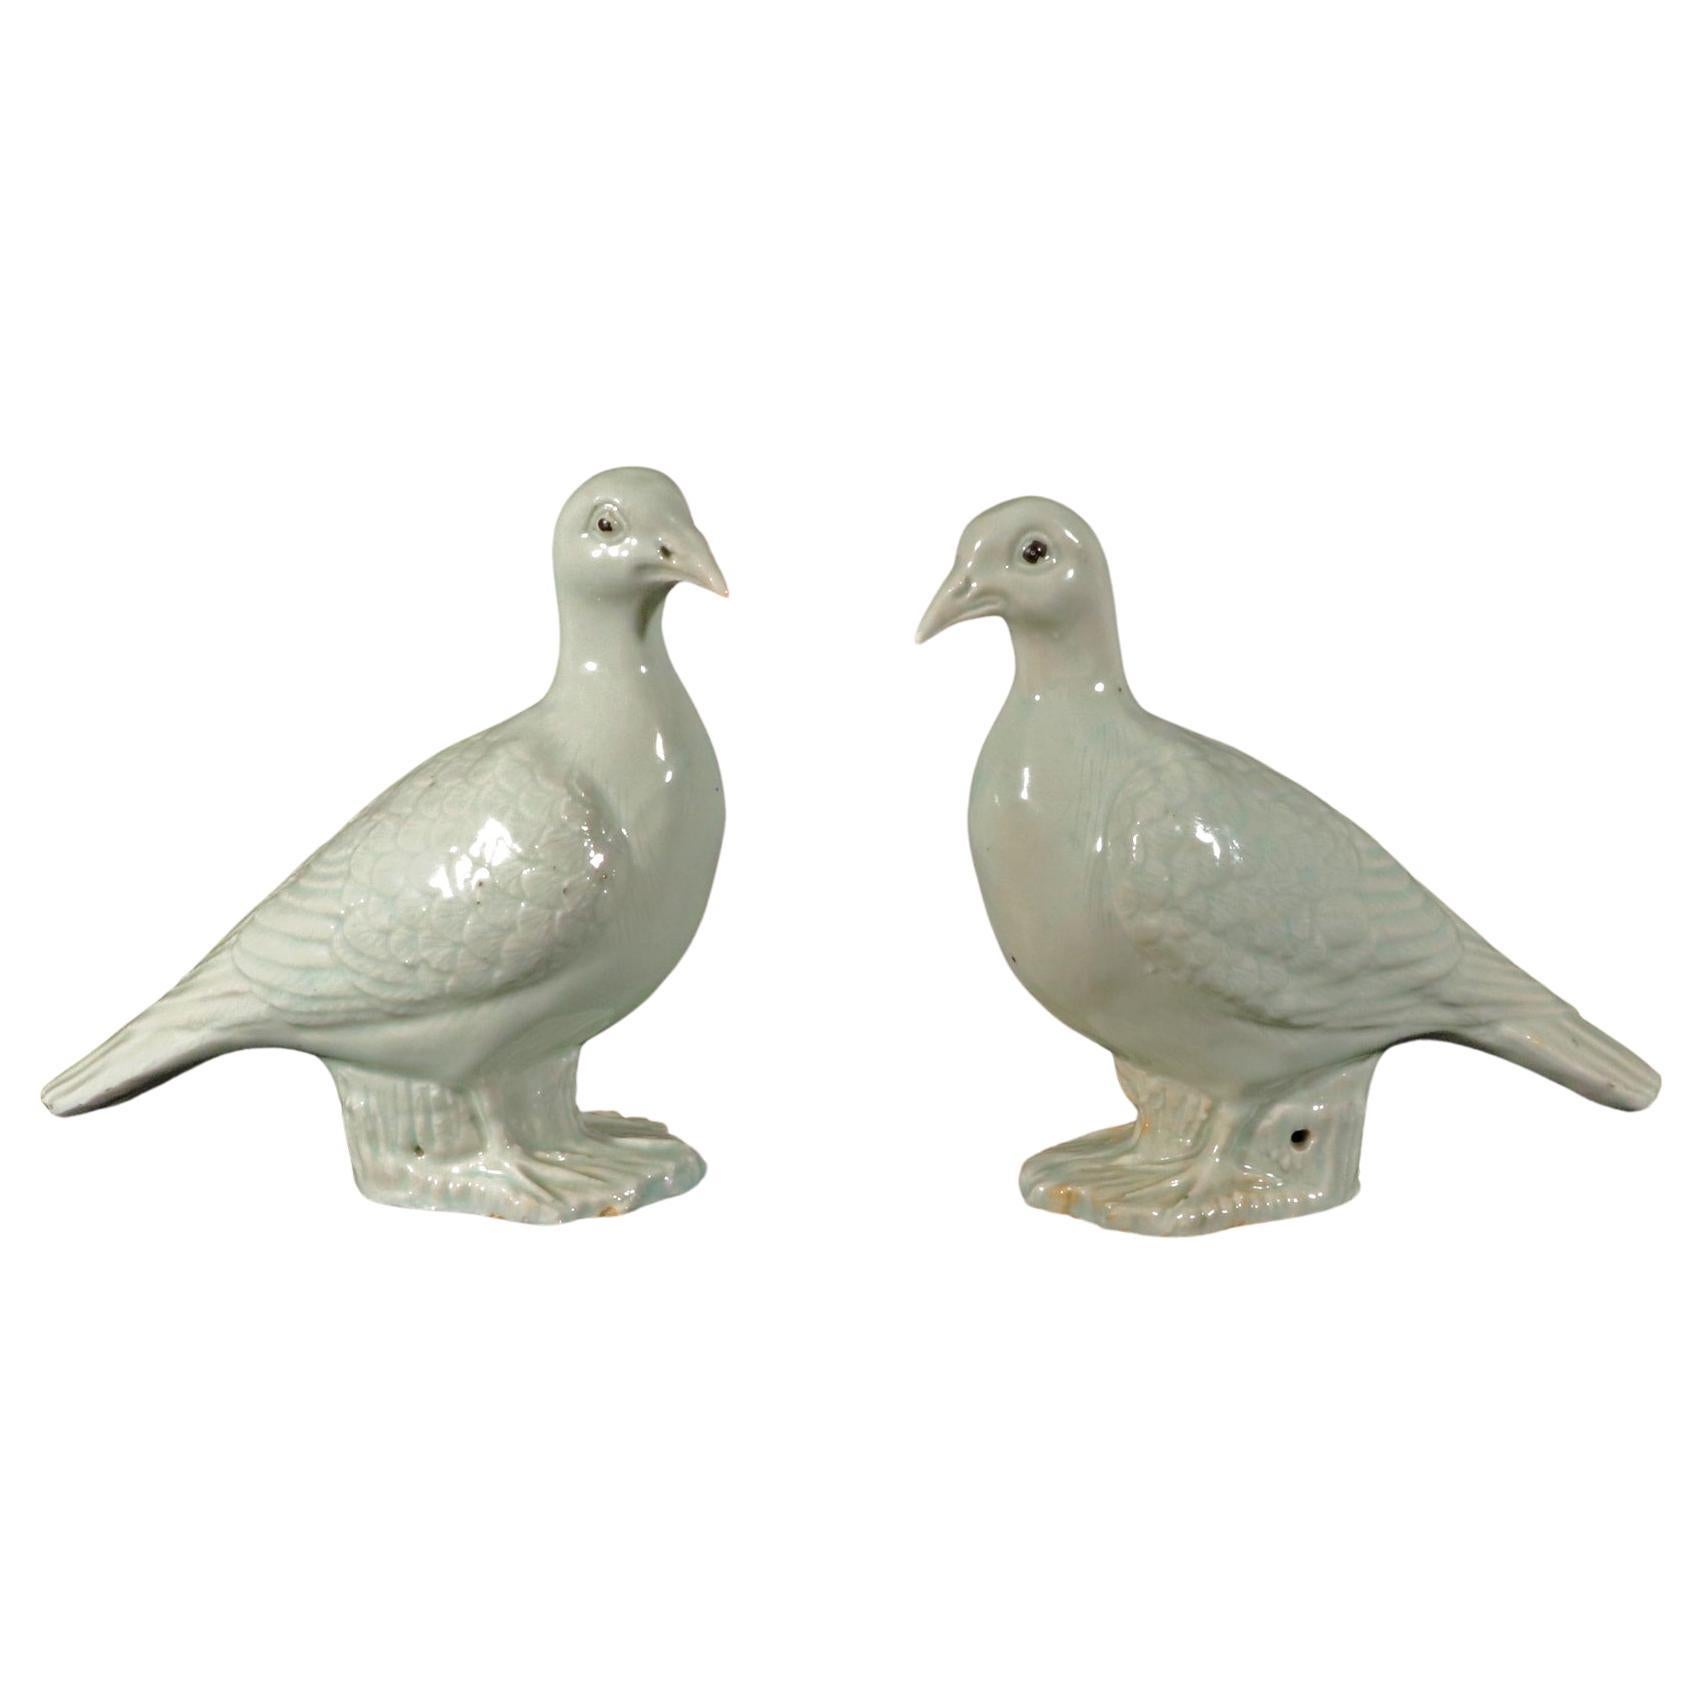 Chinese Export Porcelain Models of White Doves